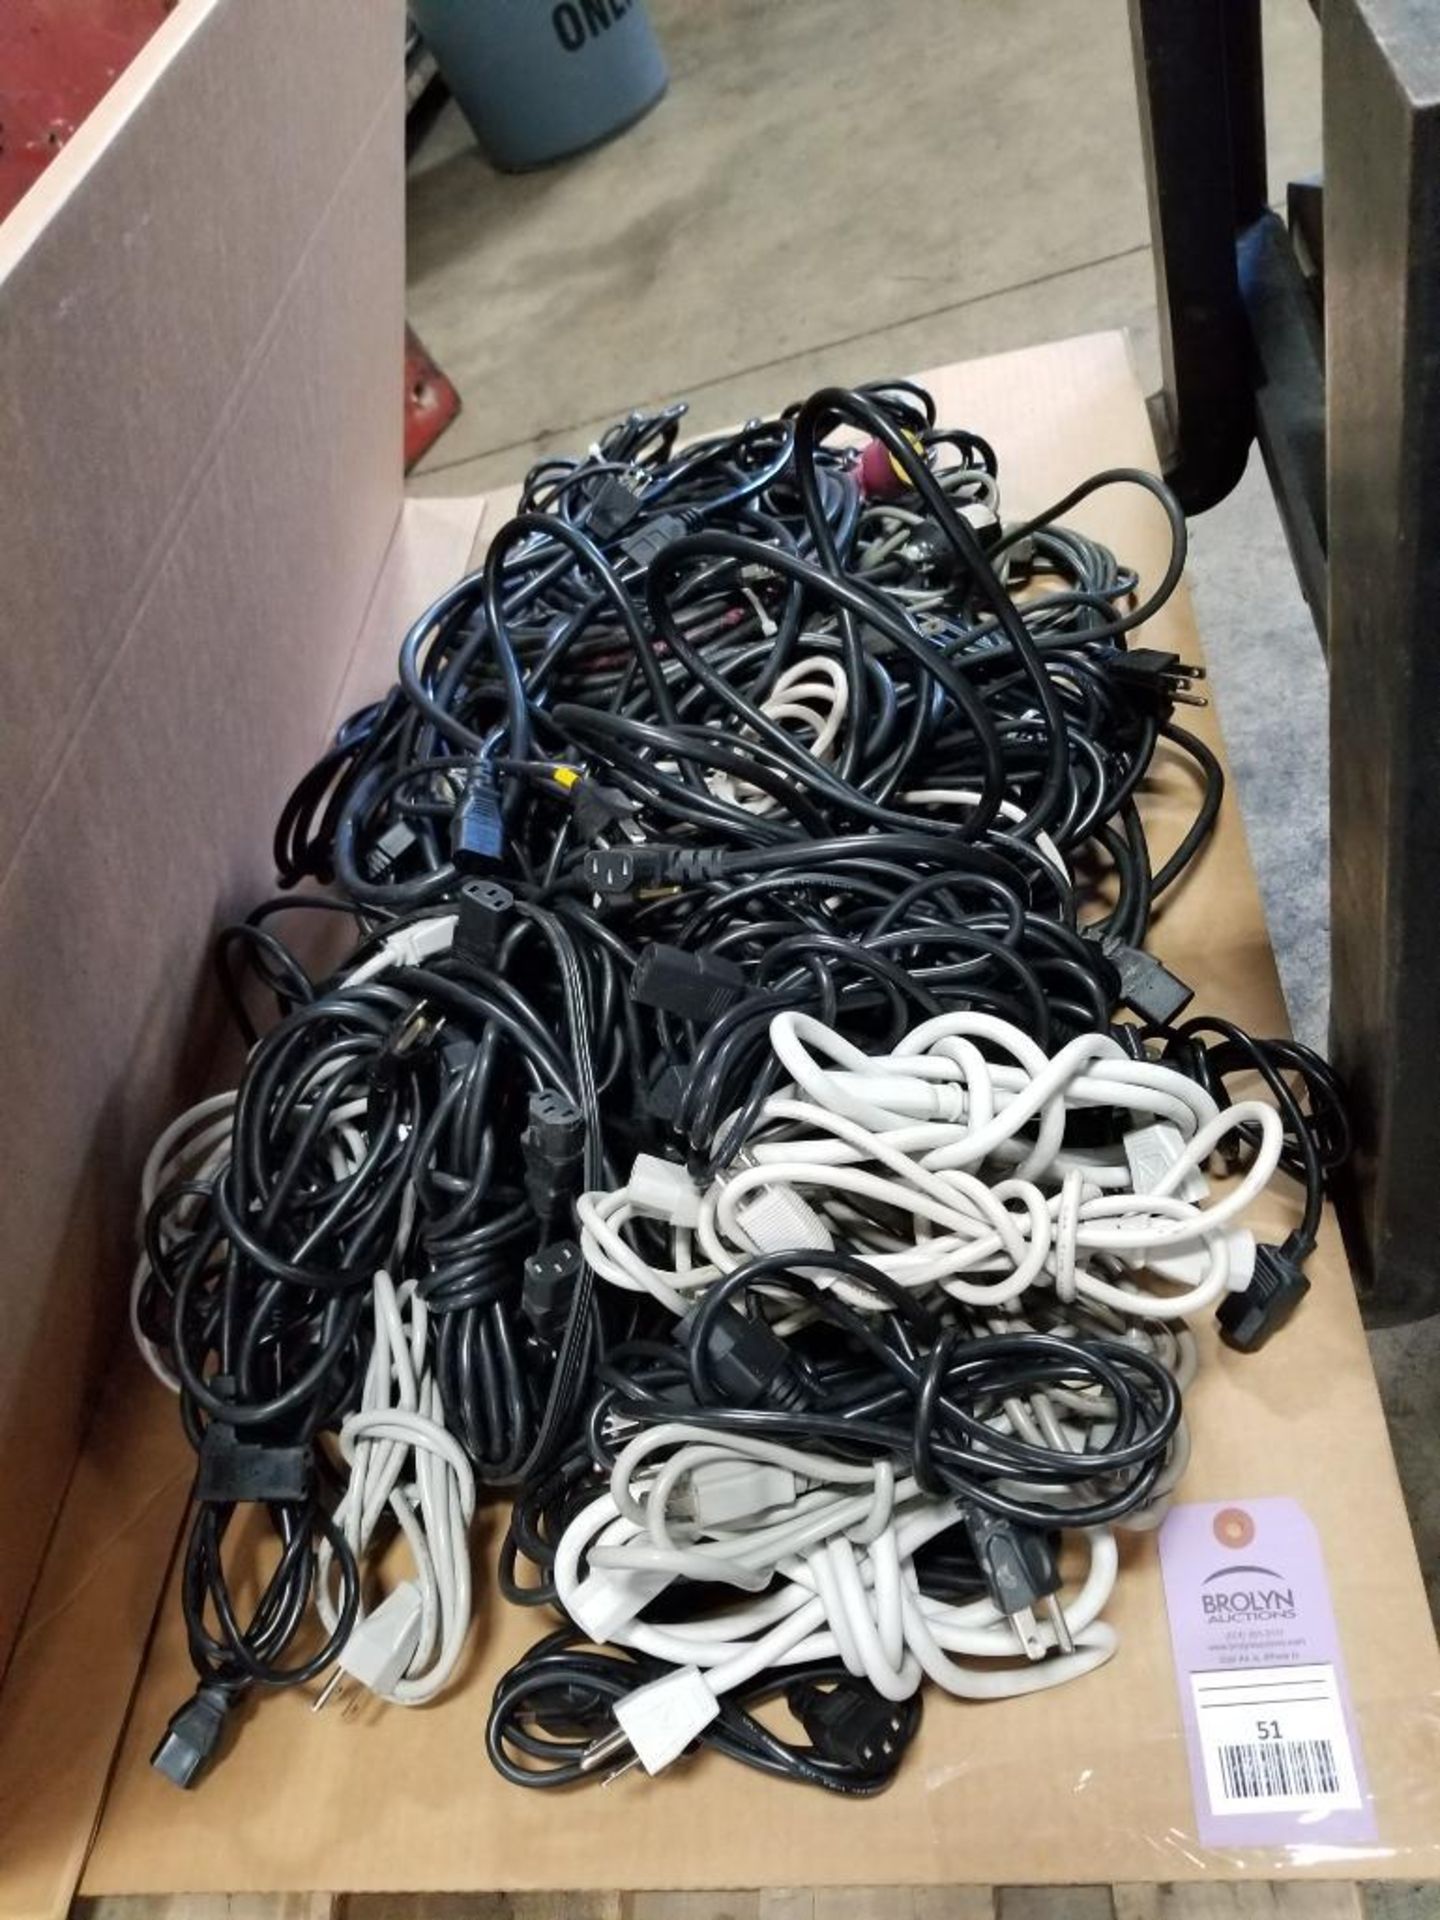 Large assortment of hospital grade cords.